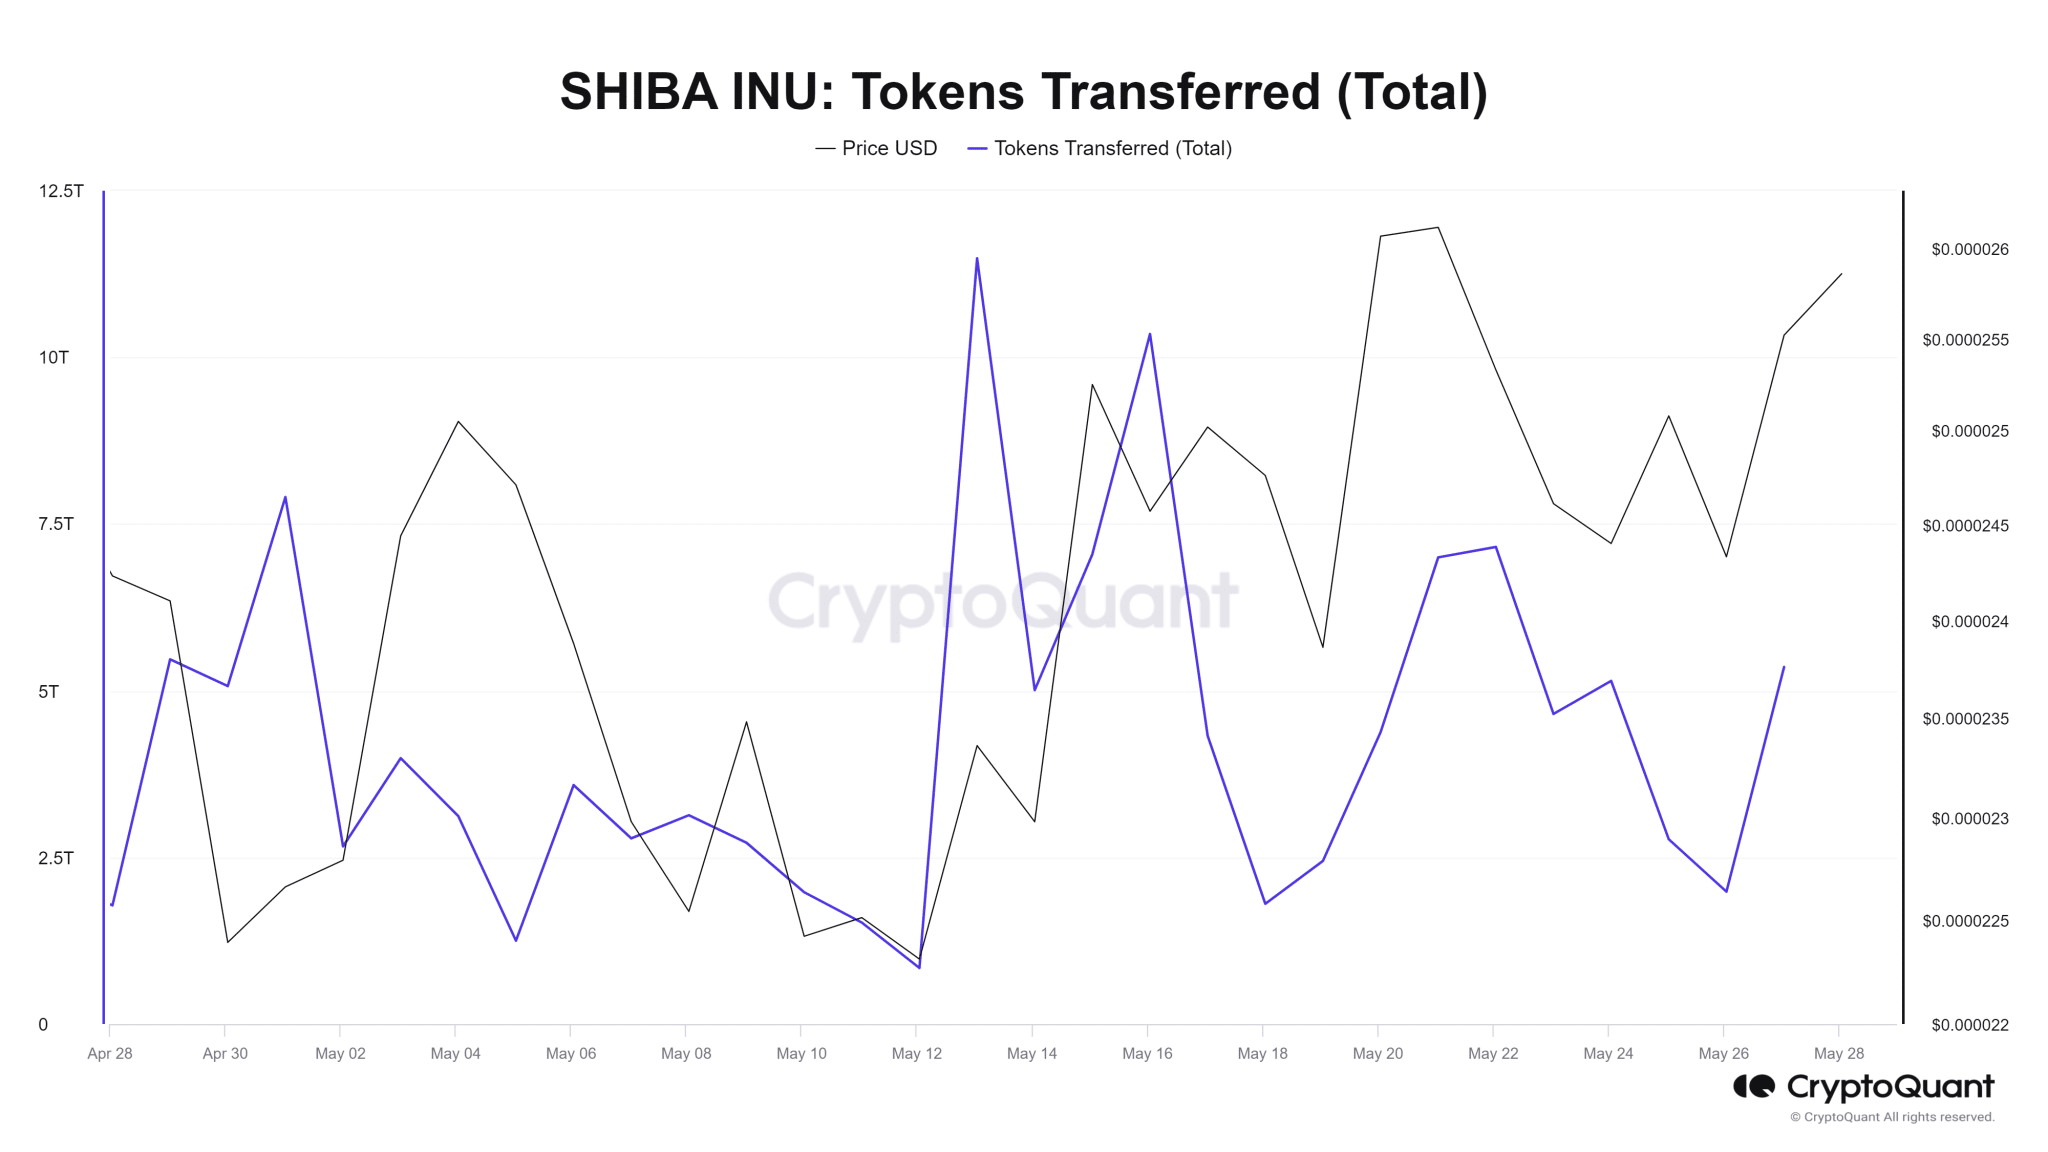 SHIBA INU Tokens Transferred Total